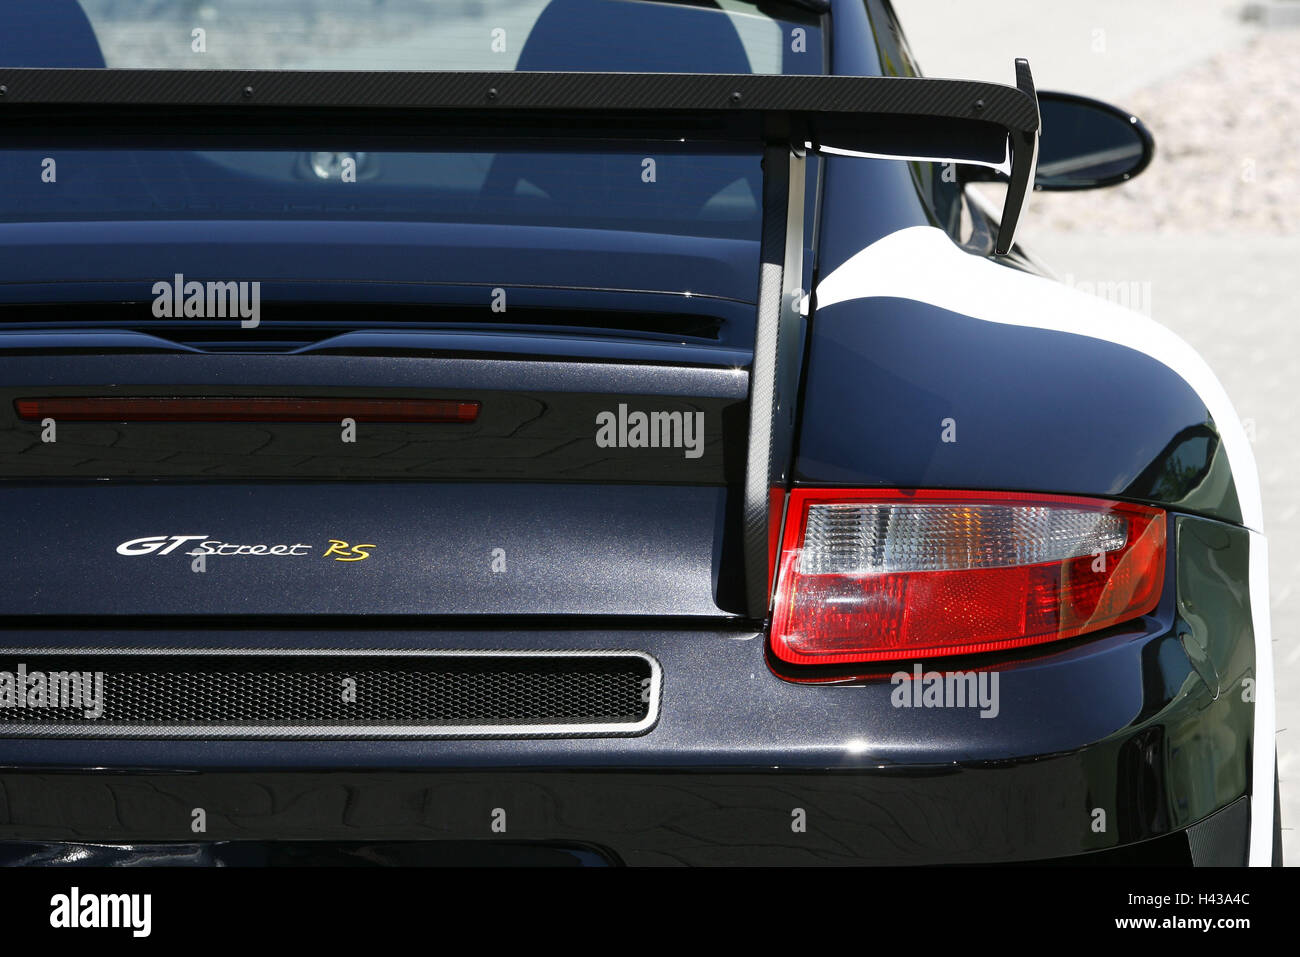 Spoiler car -Fotos und -Bildmaterial in hoher Auflösung – Alamy